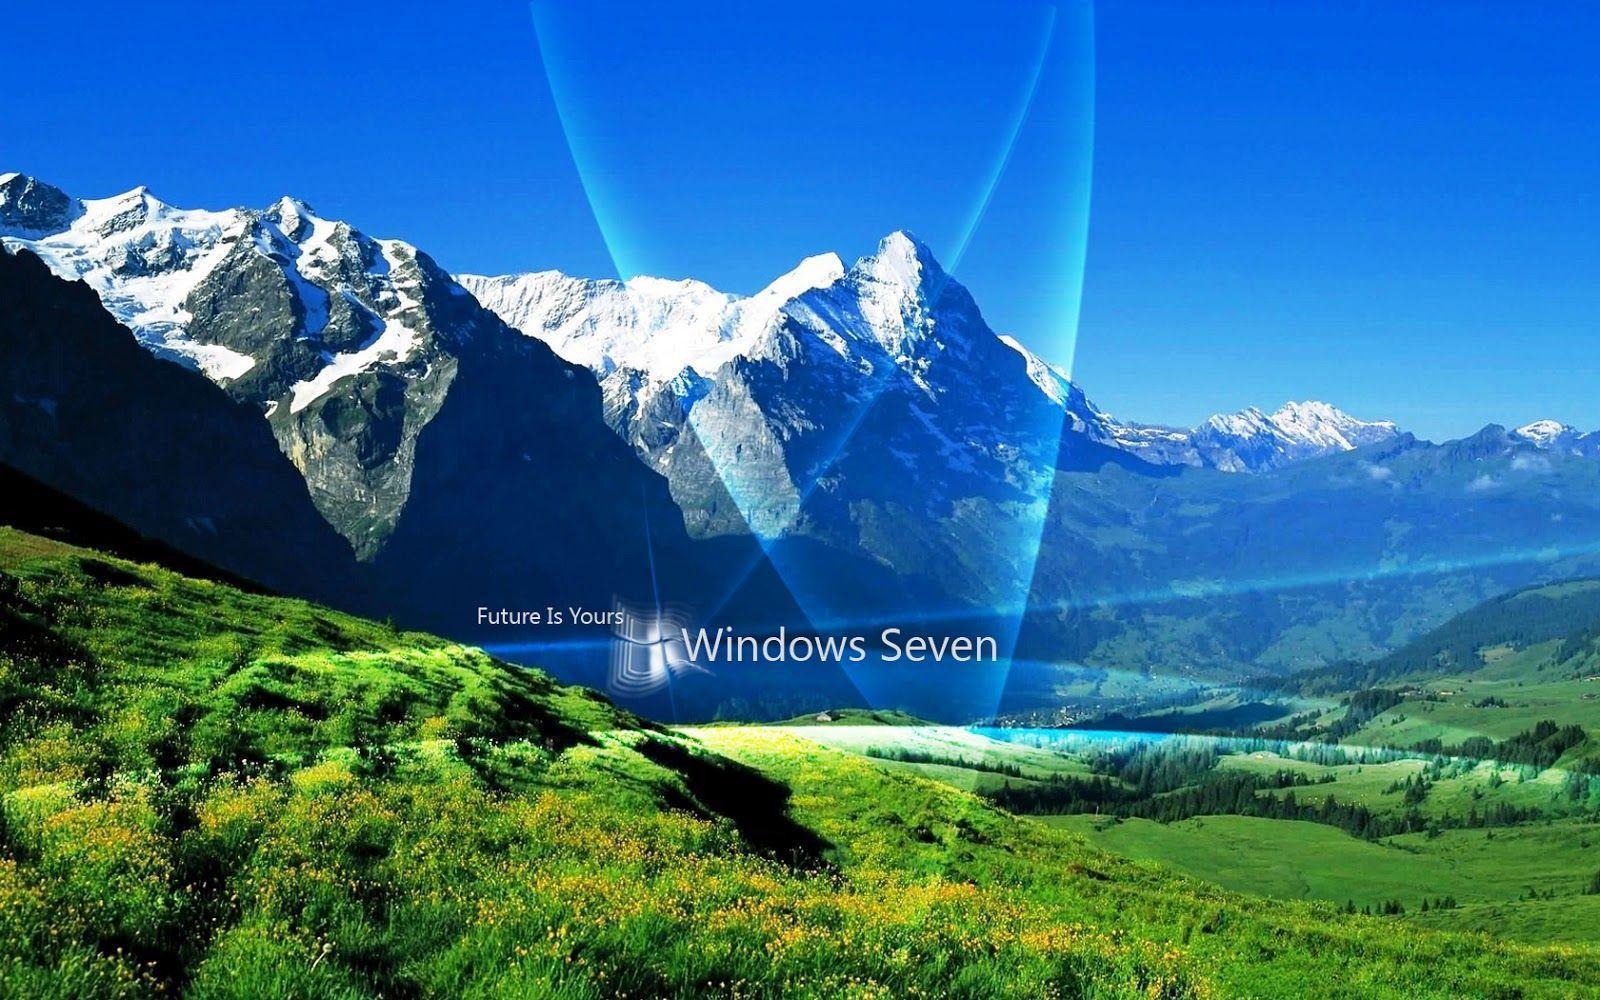 Windows 7 HD Wallpaper. Free Software. Free IDM Forever